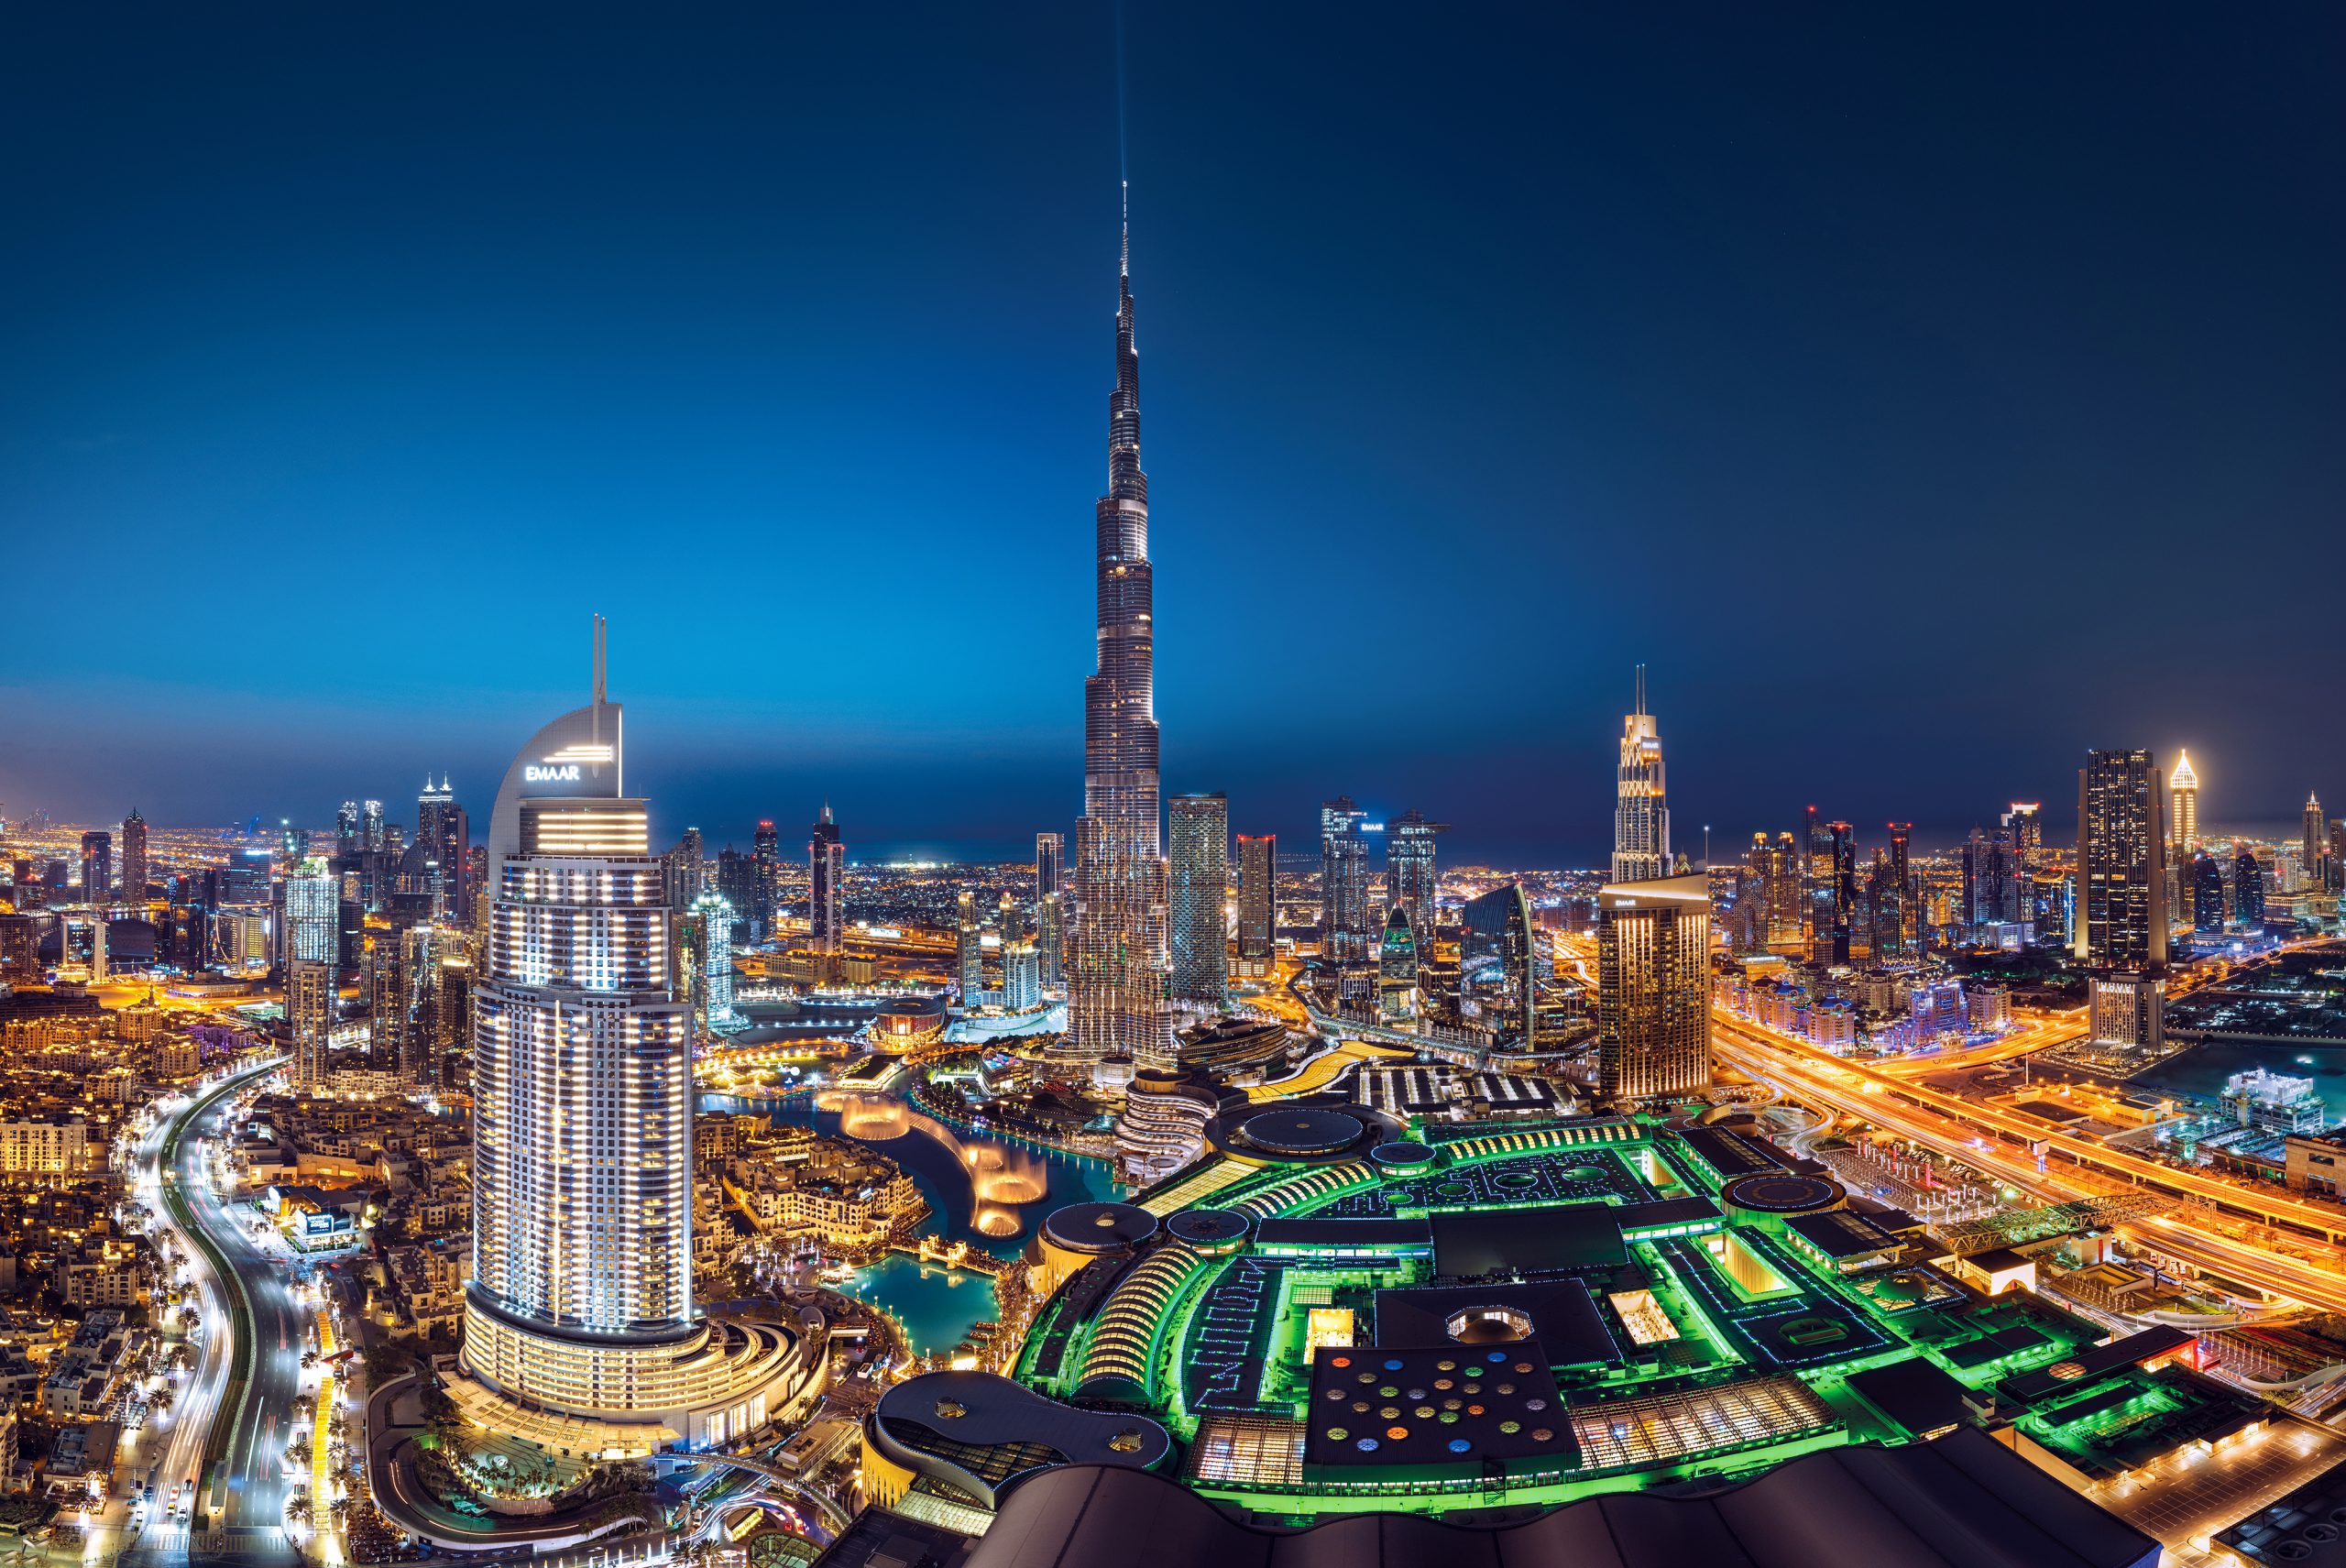 Burj Khalifa Engineering masterpiece